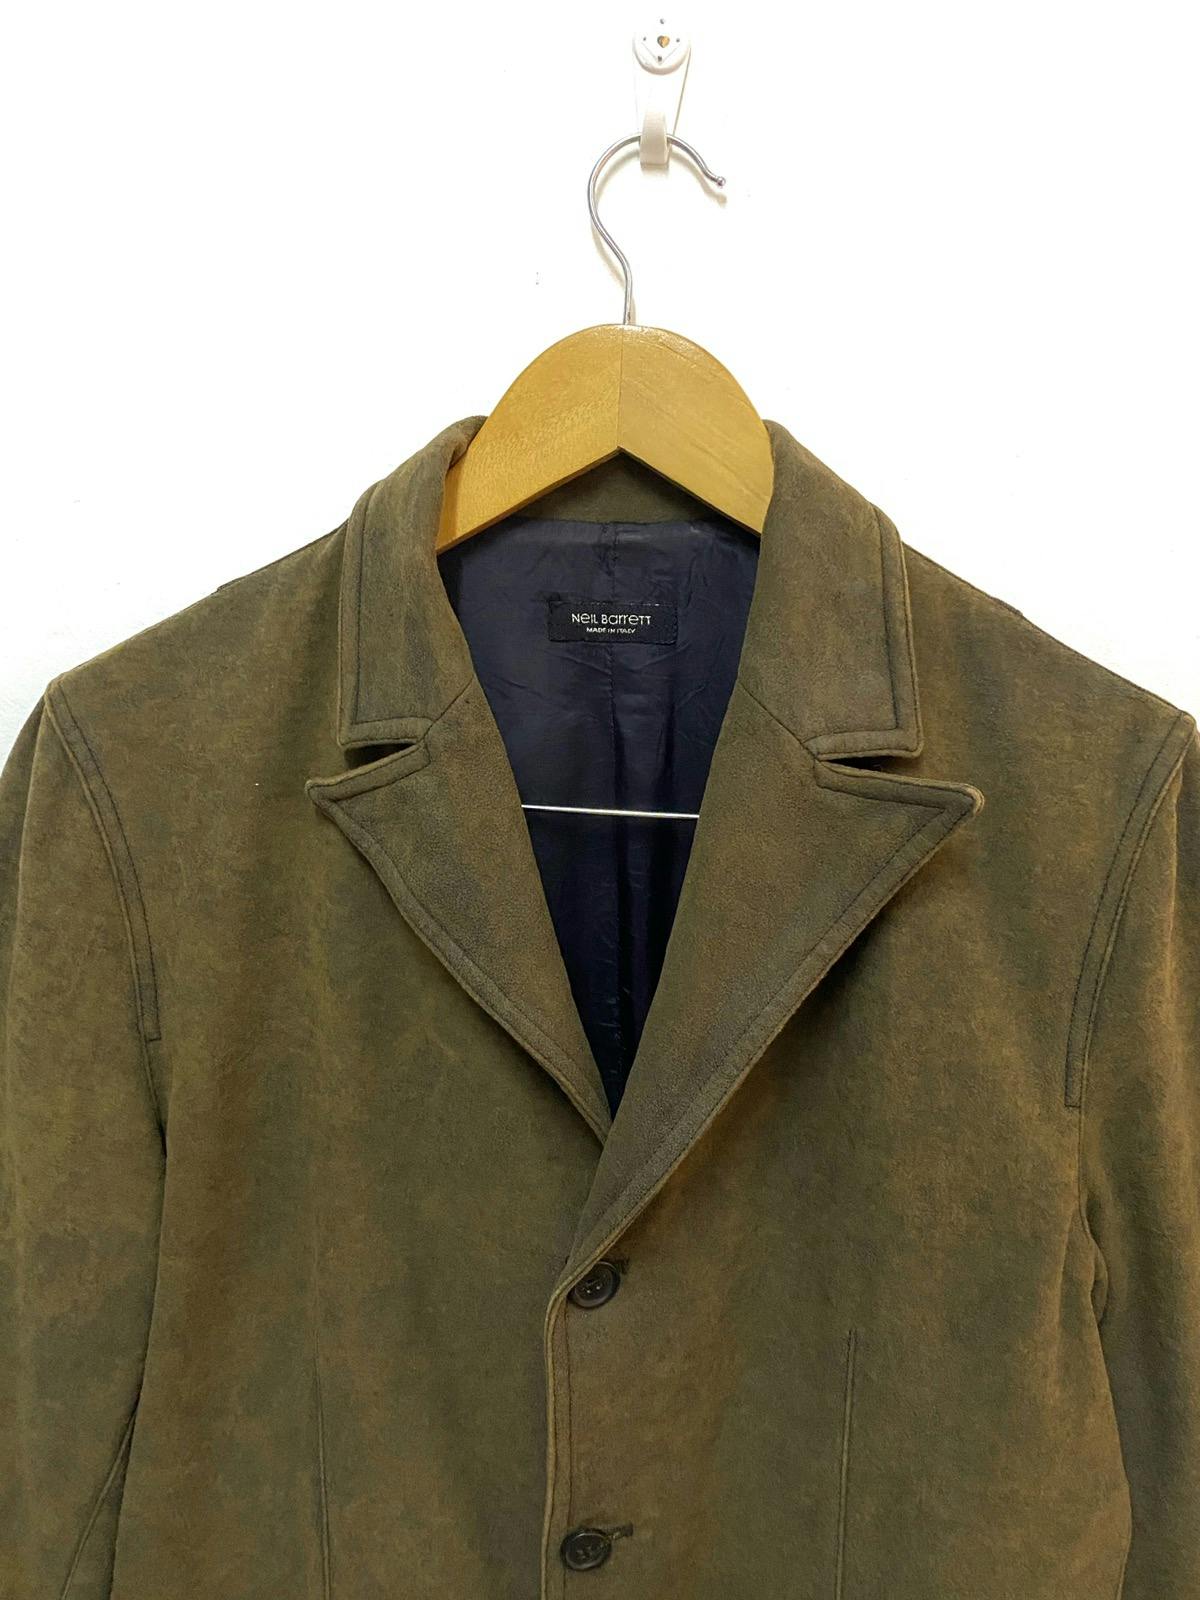 Neil Barrett Jacket Coat Blazer Made in Italy - 2